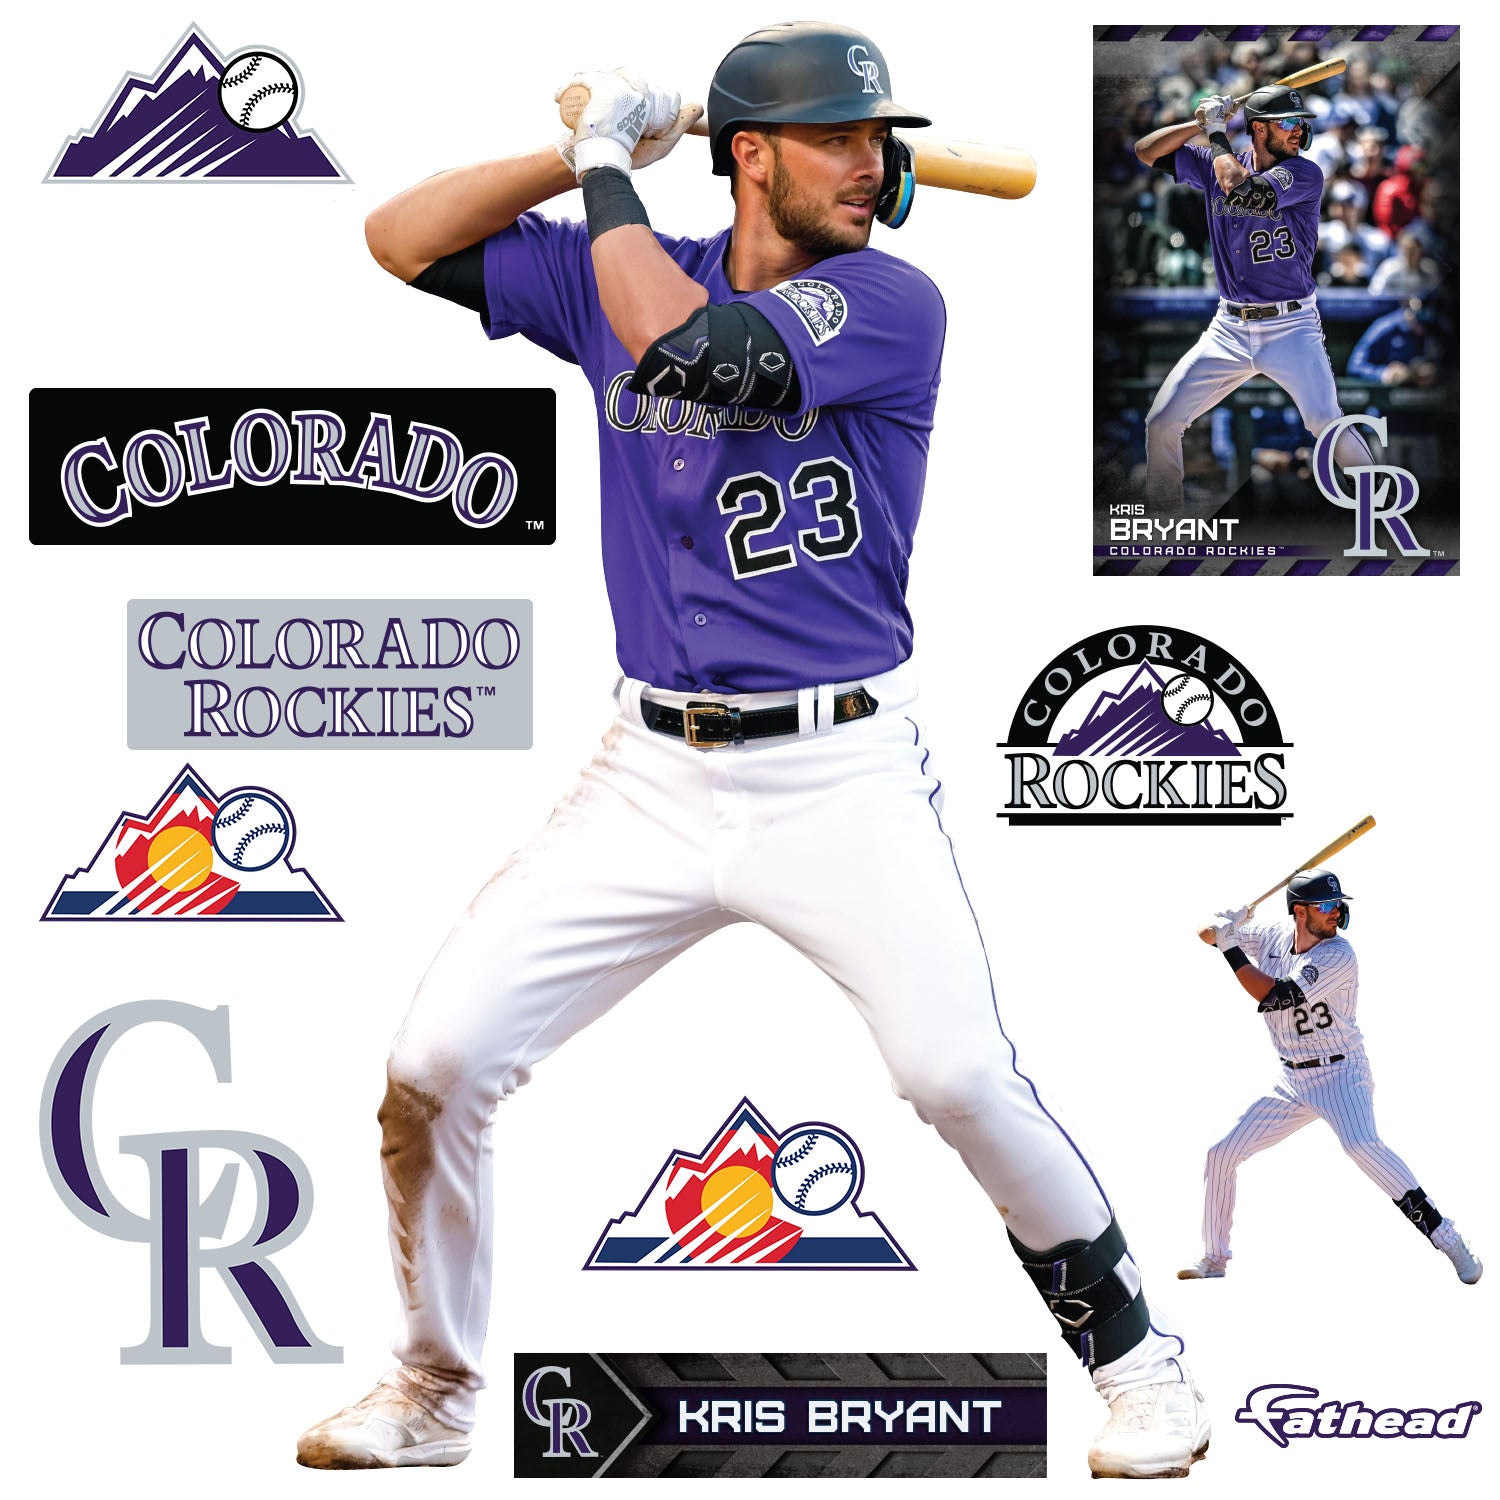 First look at Kris Bryant in the purple - Colorado Rockies